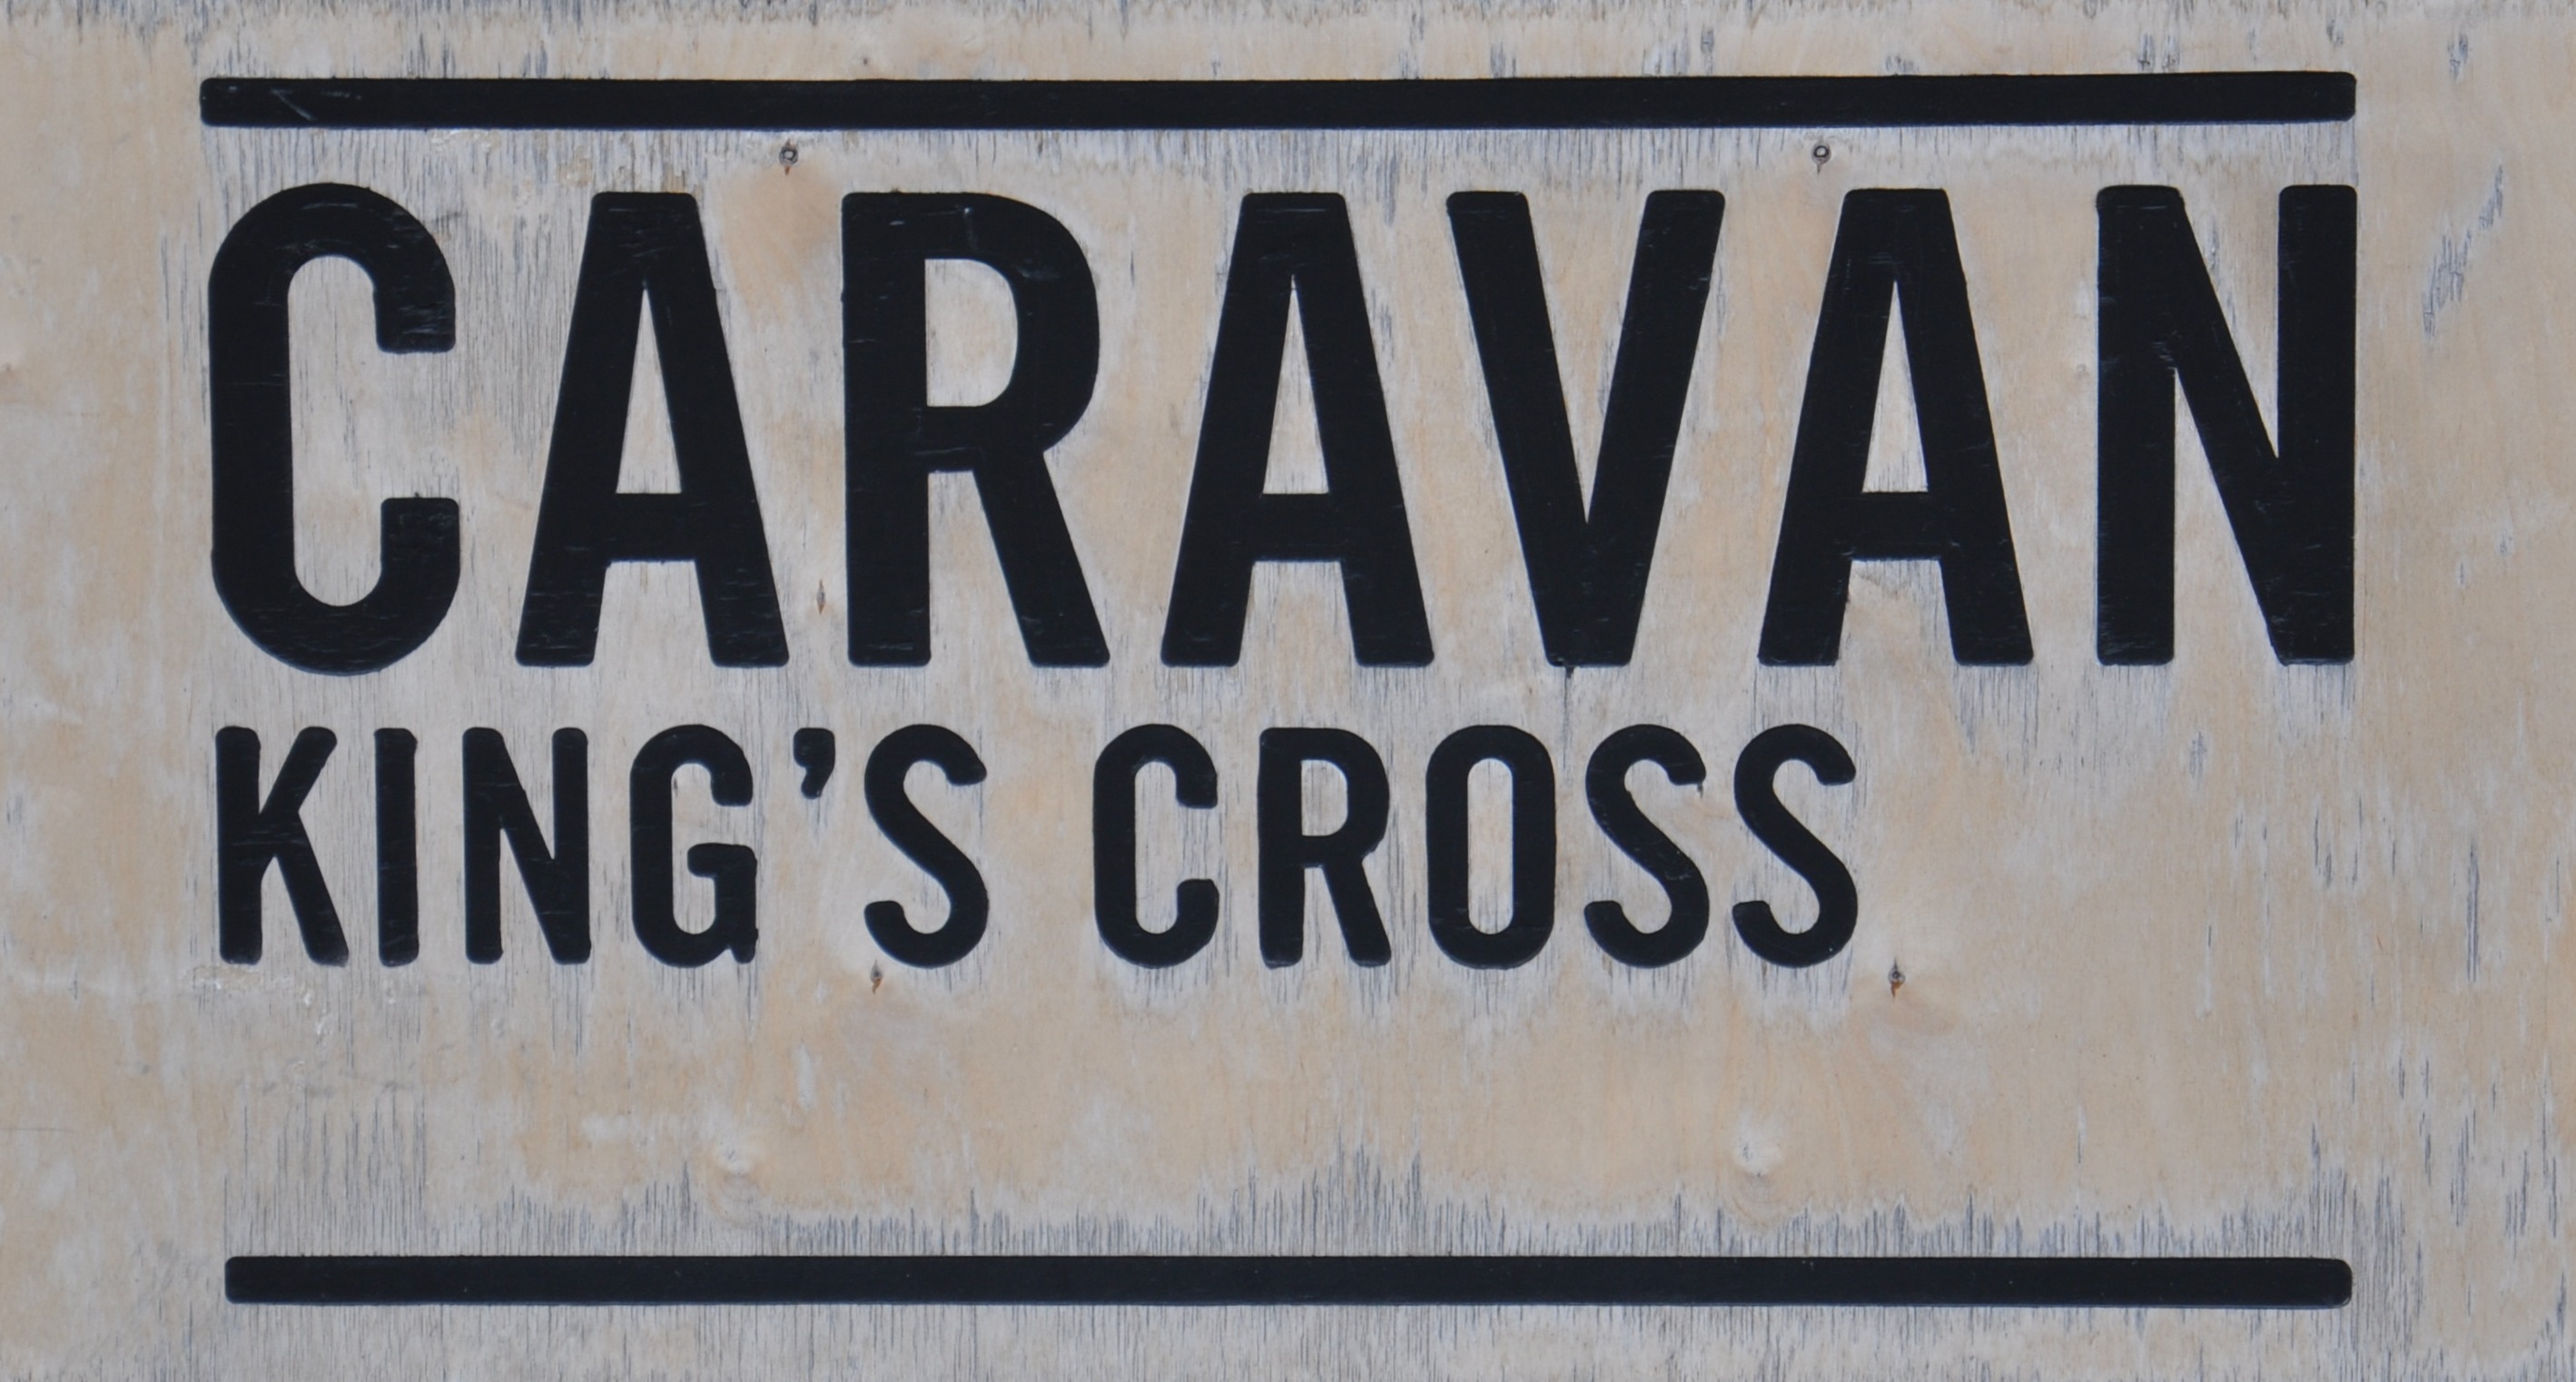 The Caravan King's Cross Sign: "Caravan King's Cross" in black letters on a white background